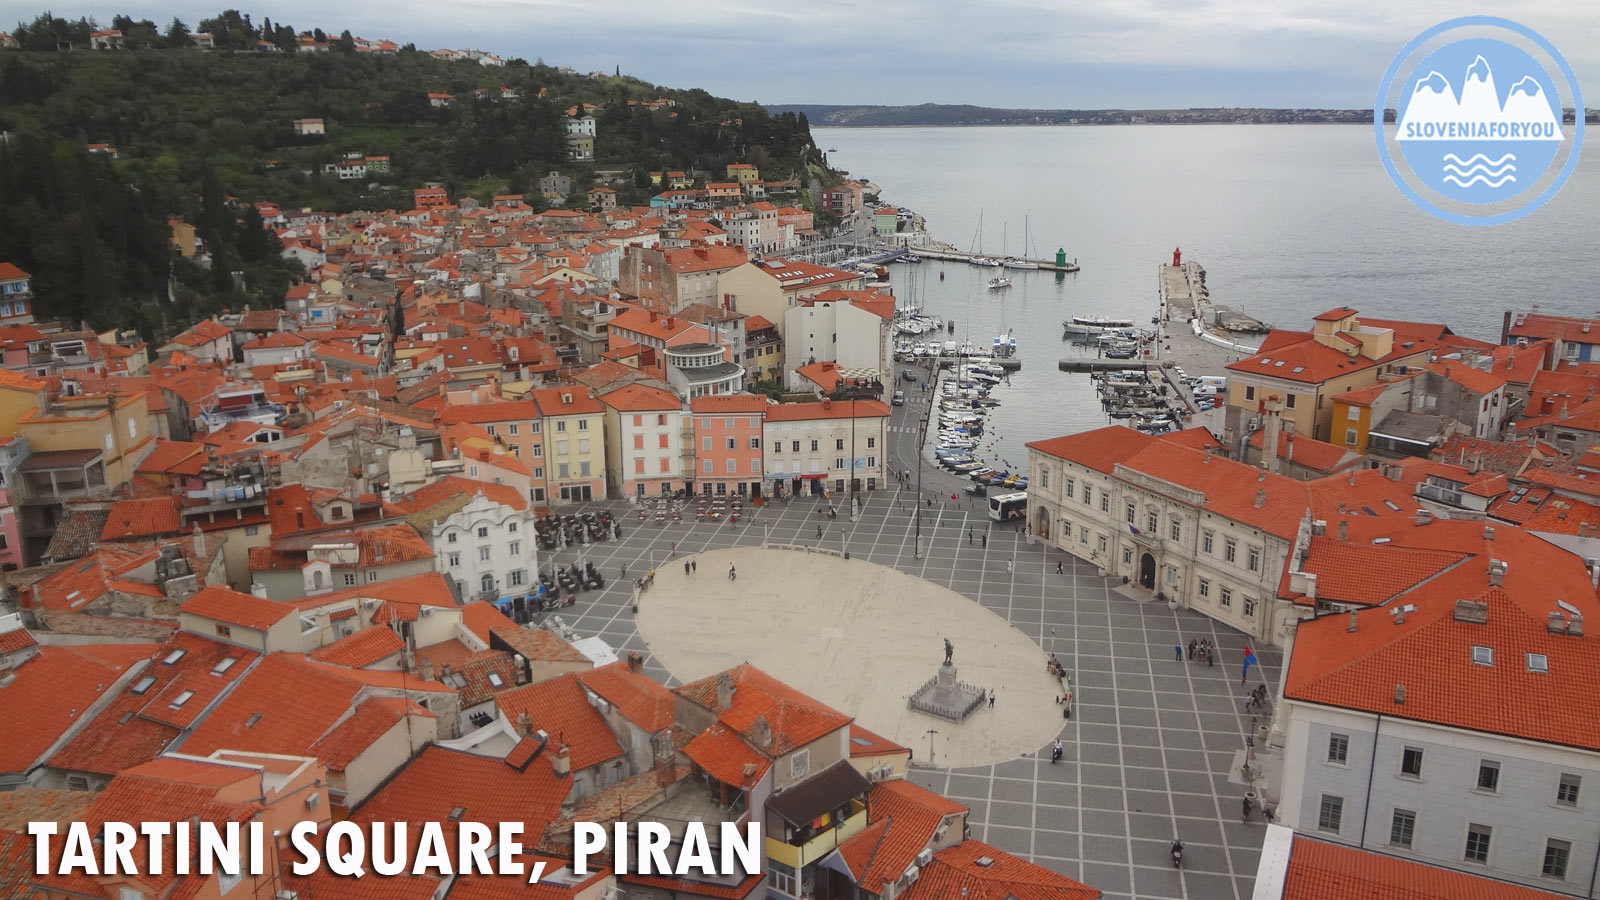 Stunning Piran, Tartini Square, Sloveniaforyou